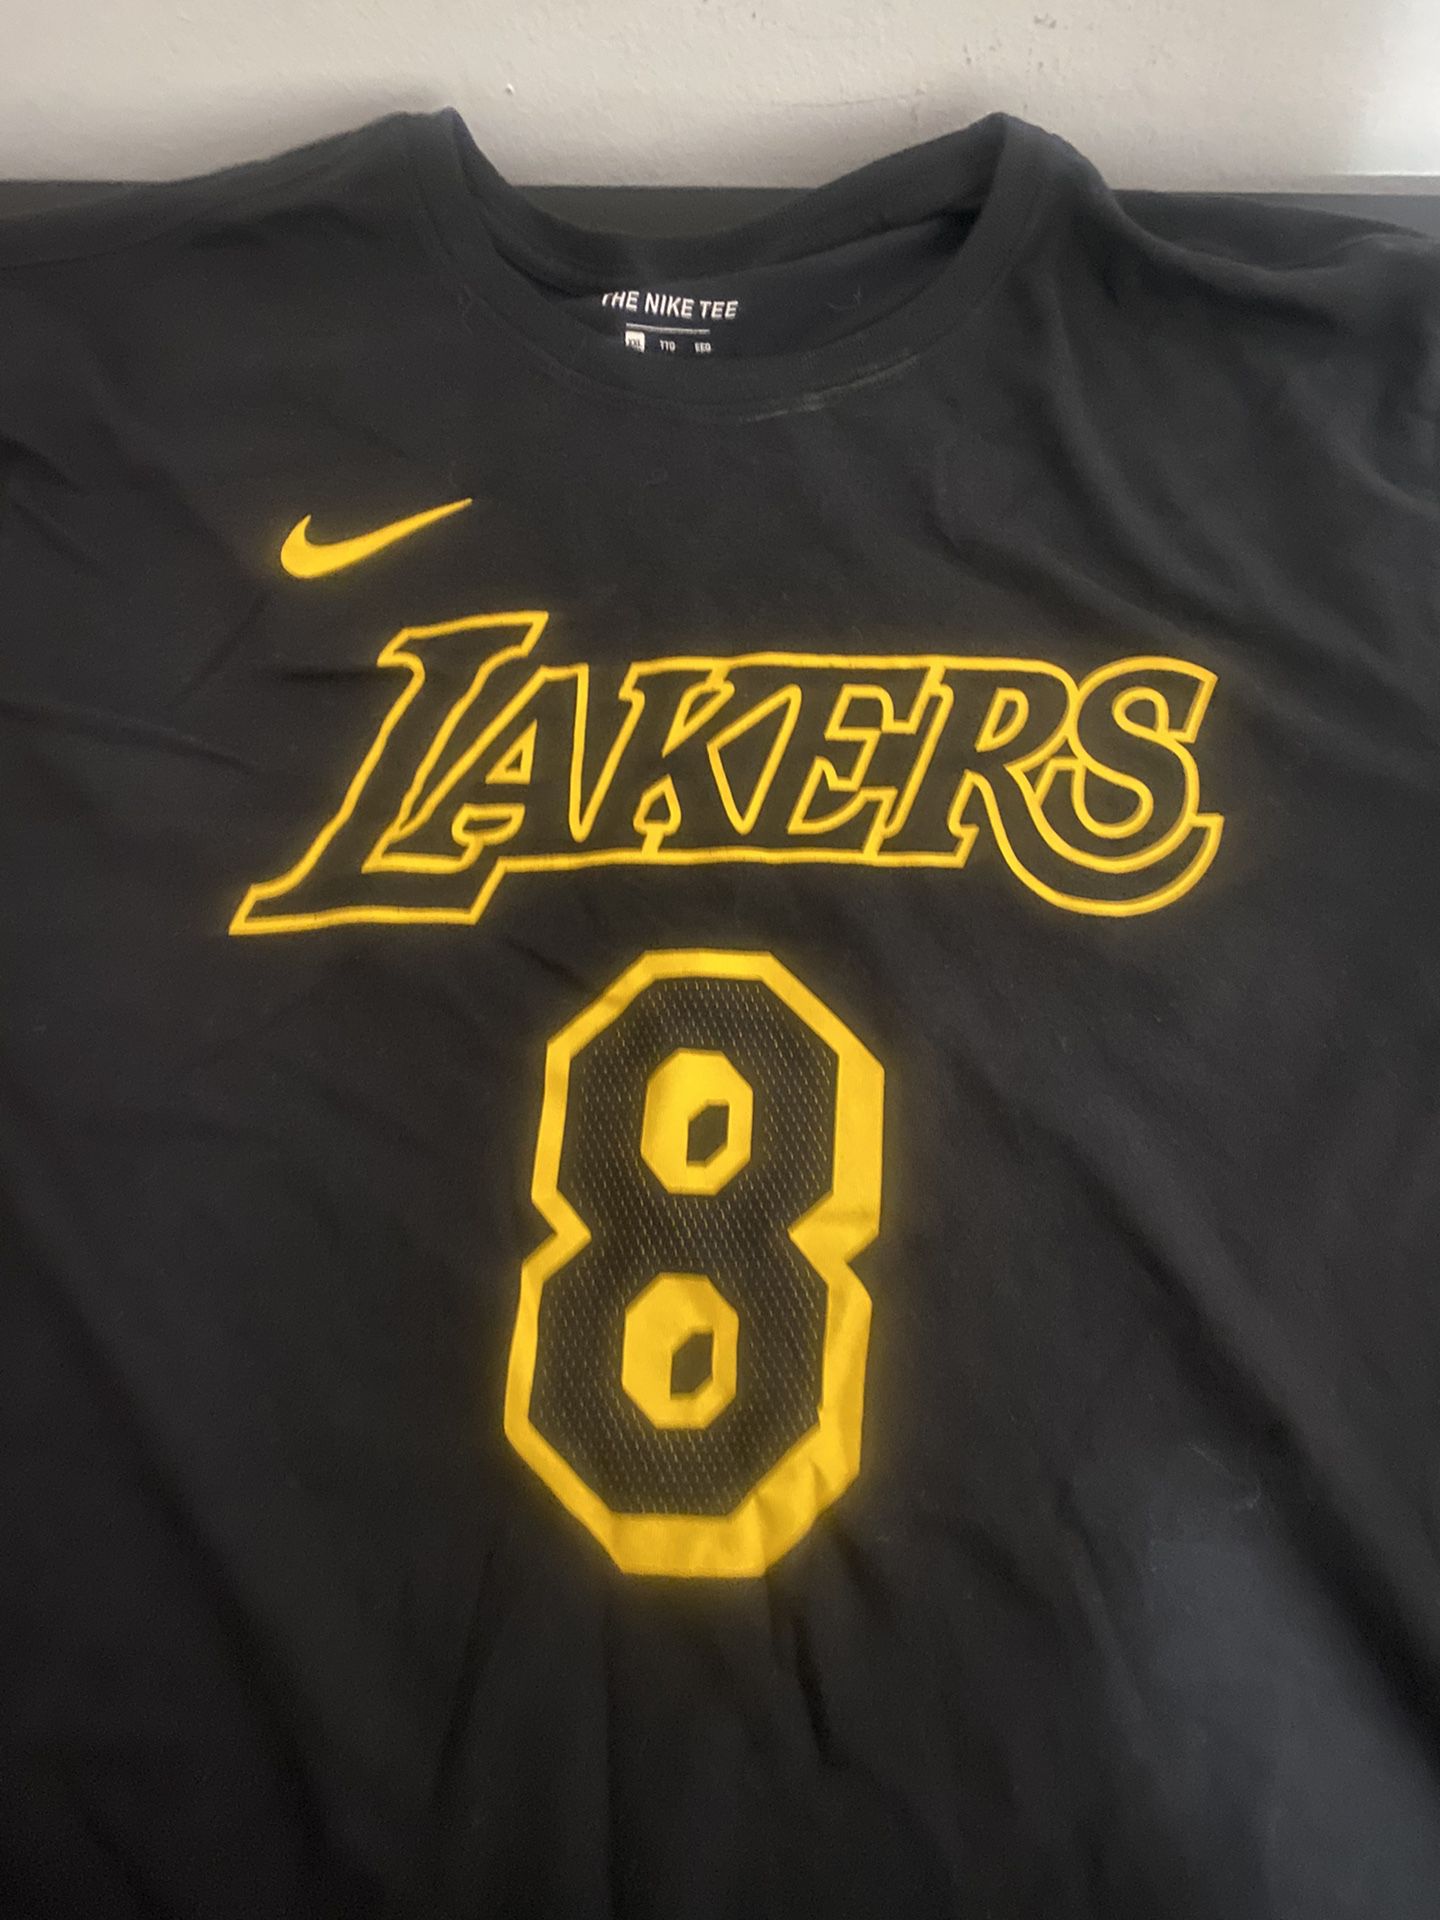 Nike Kobe Bryant Los Angeles Lakers Retired Player T-Shirt, Big Boys (8-20)  - Macy's